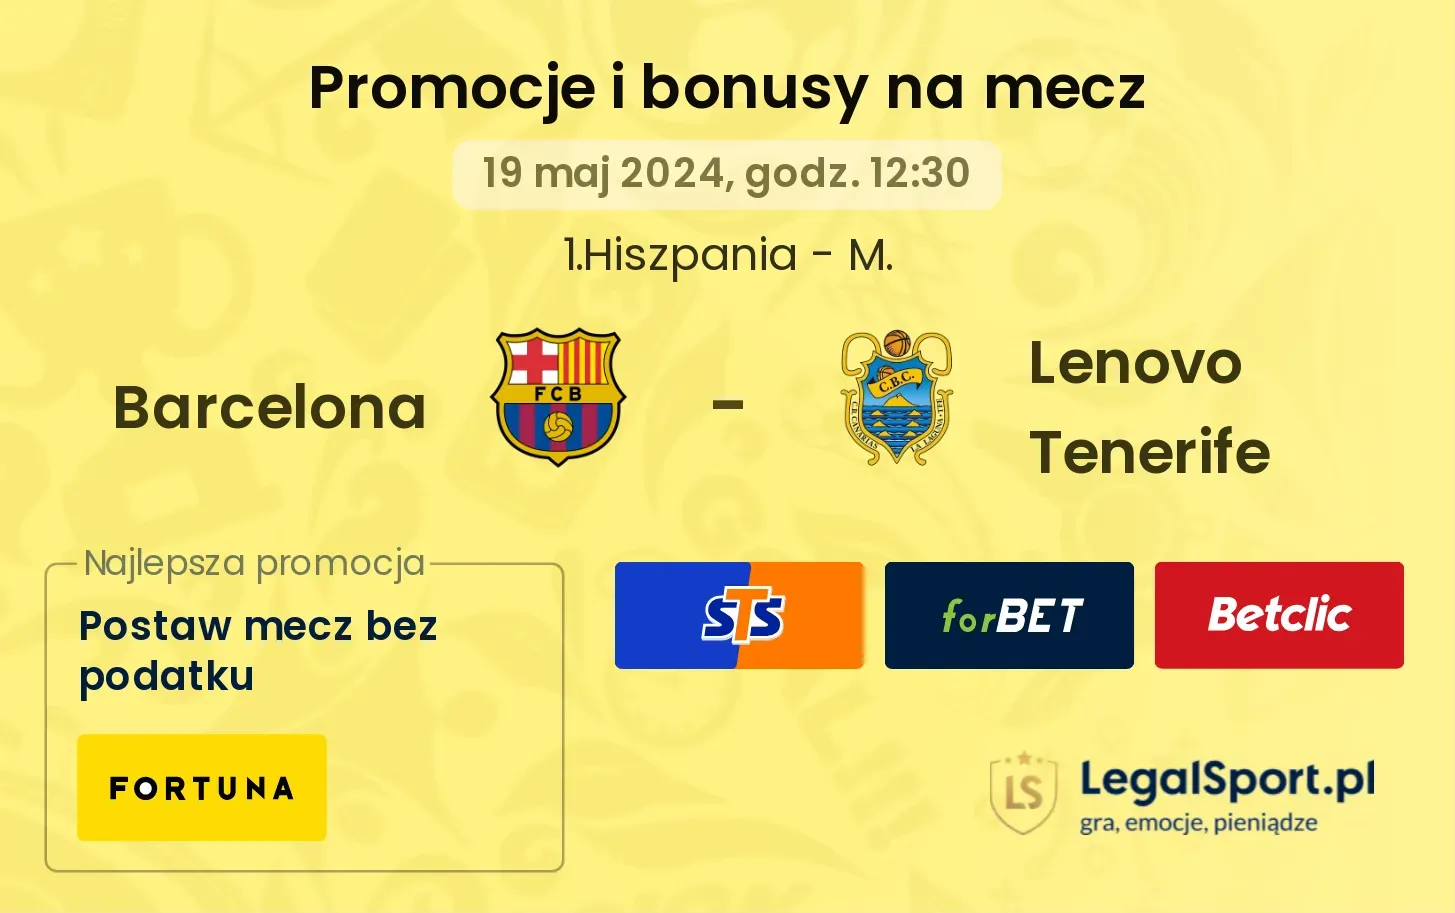 Barcelona - Lenovo Tenerife bonusy i promocje (19.05, 12:30)